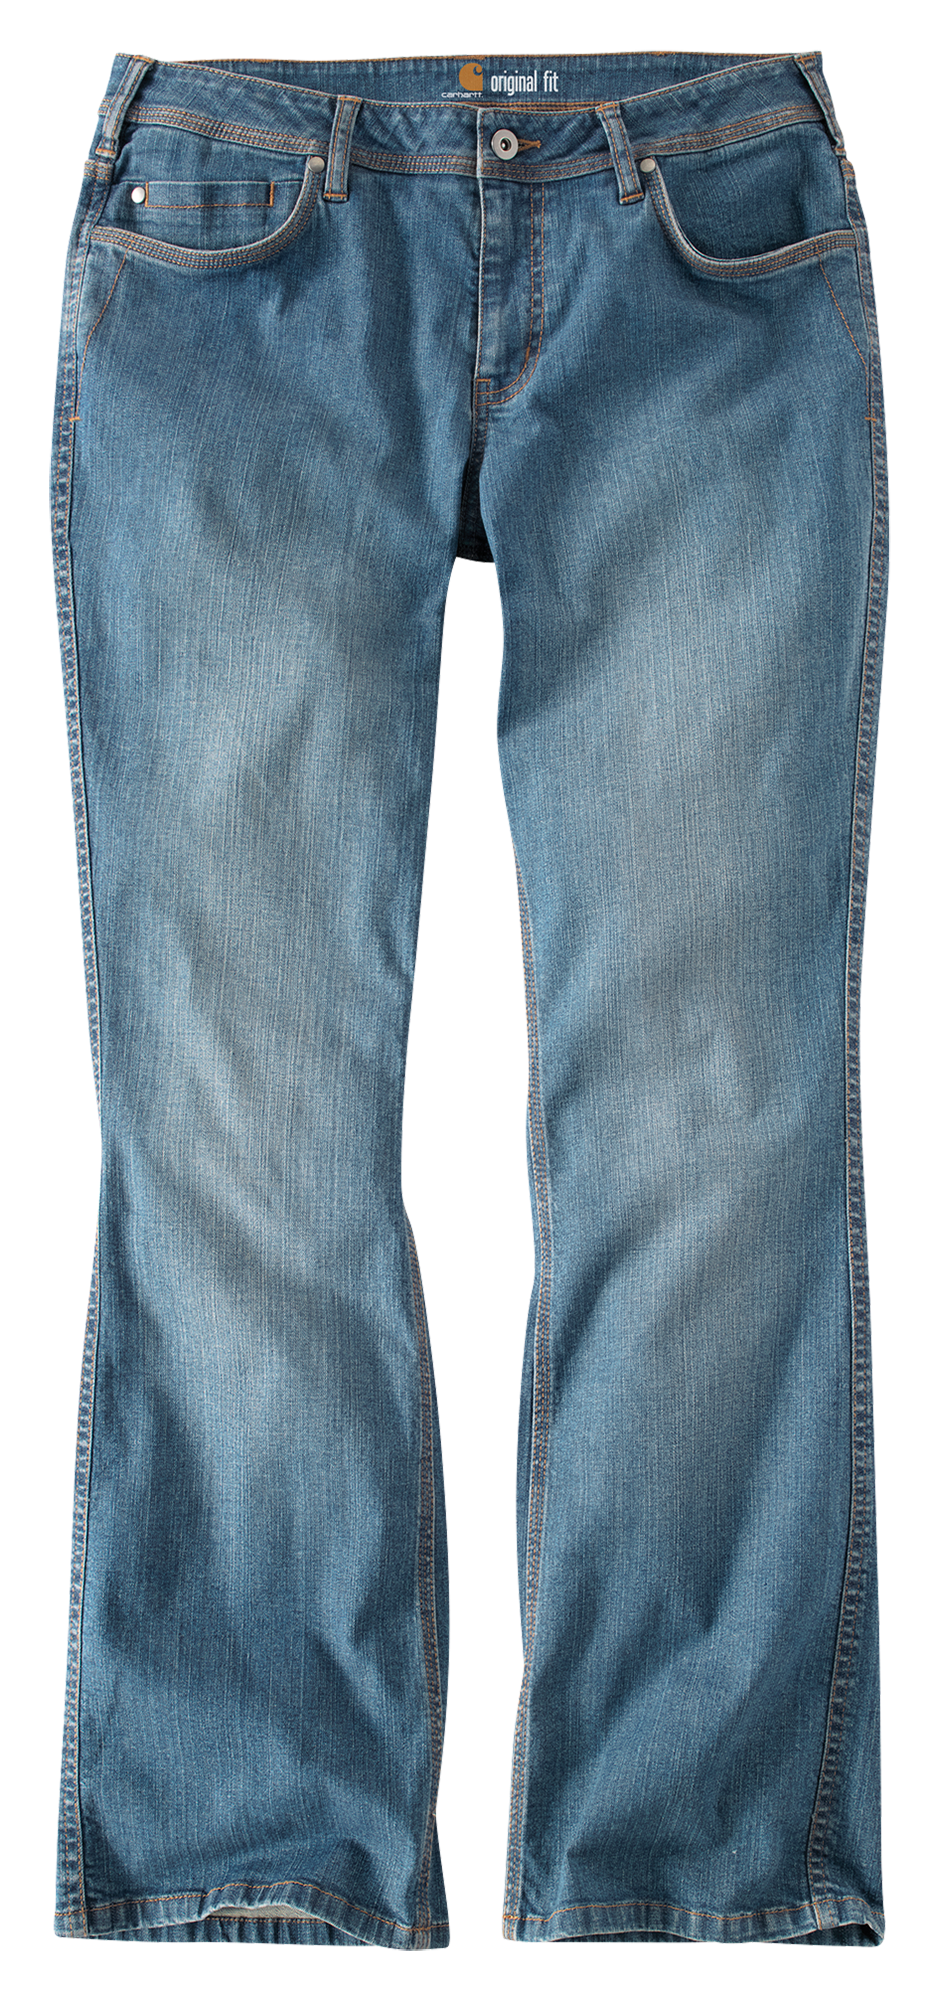 Carhartt Original Fit Jasper Jeans for Ladies | Bass Pro Shops